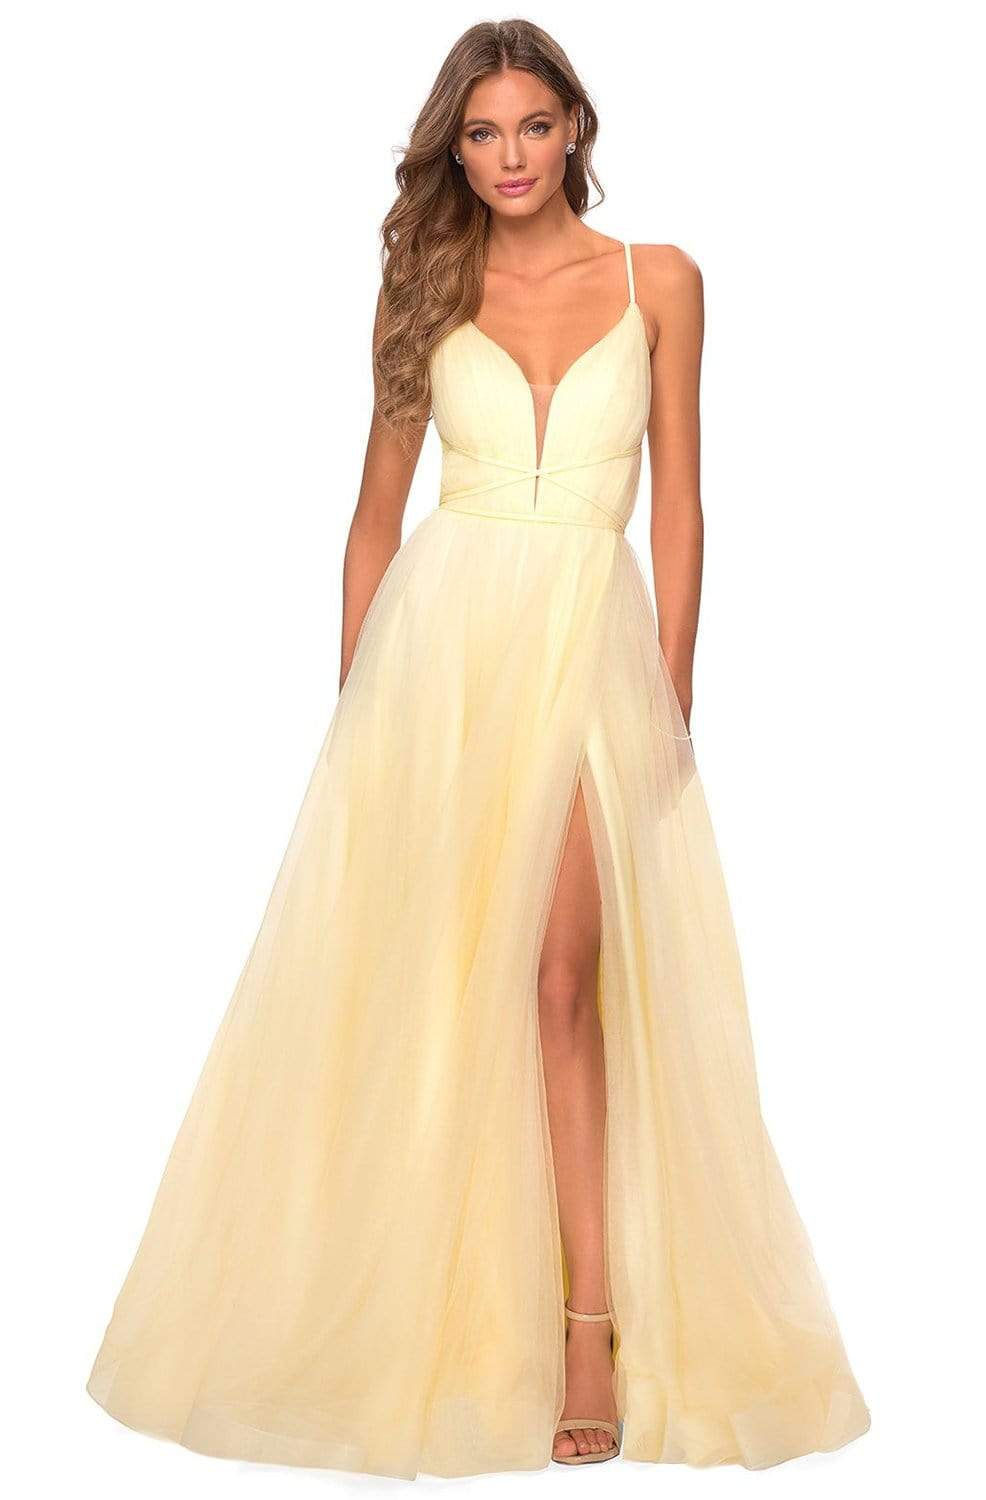 La Femme - 28893 Crisscross Strapped Bodice High Slit Tulle Dress Prom Dresses 00 / Pale Yellow